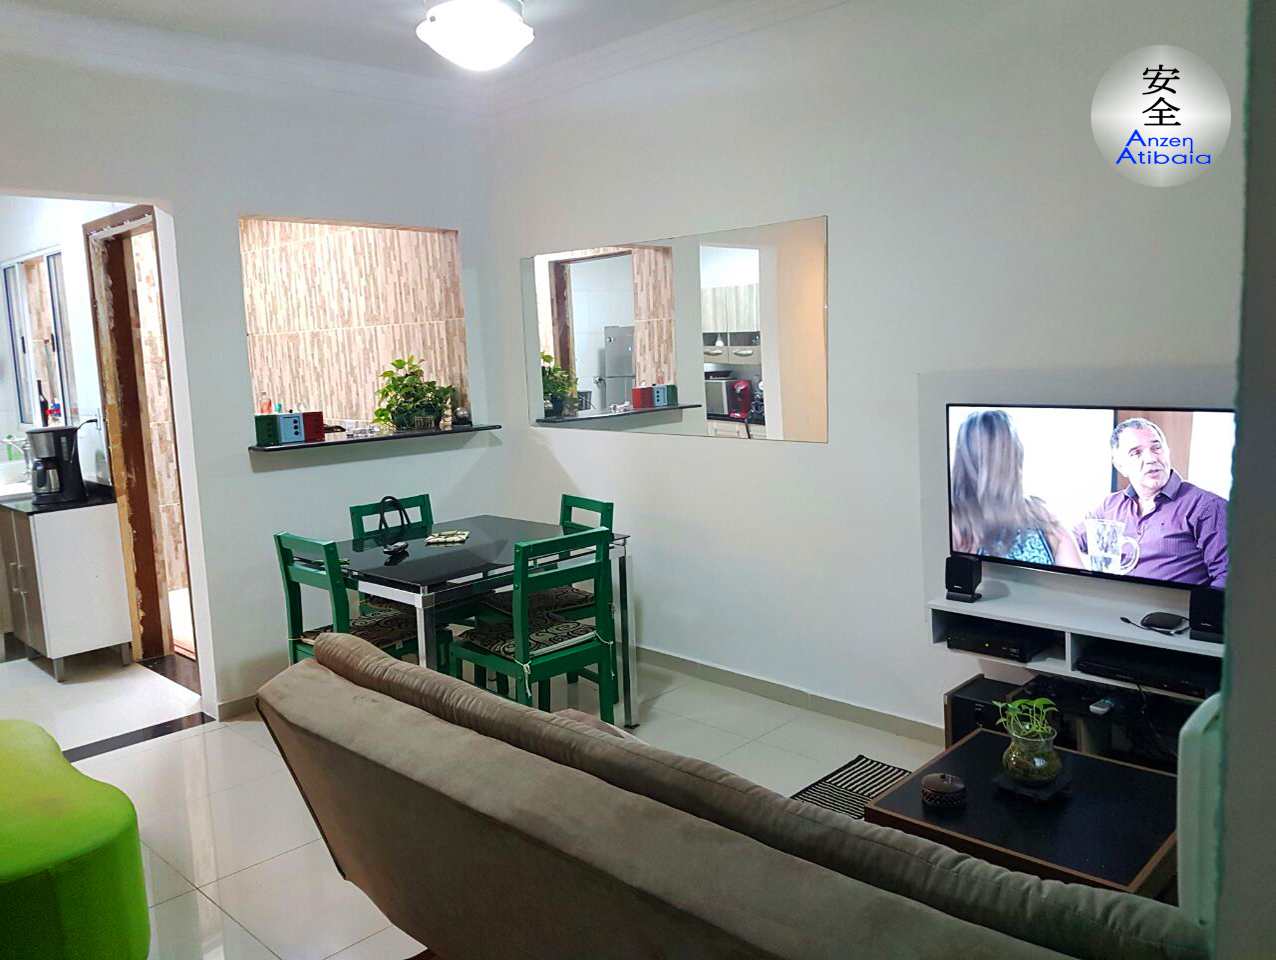 Casa, Indefinido, São Paulo - R$ 300 mil, Cod: 724